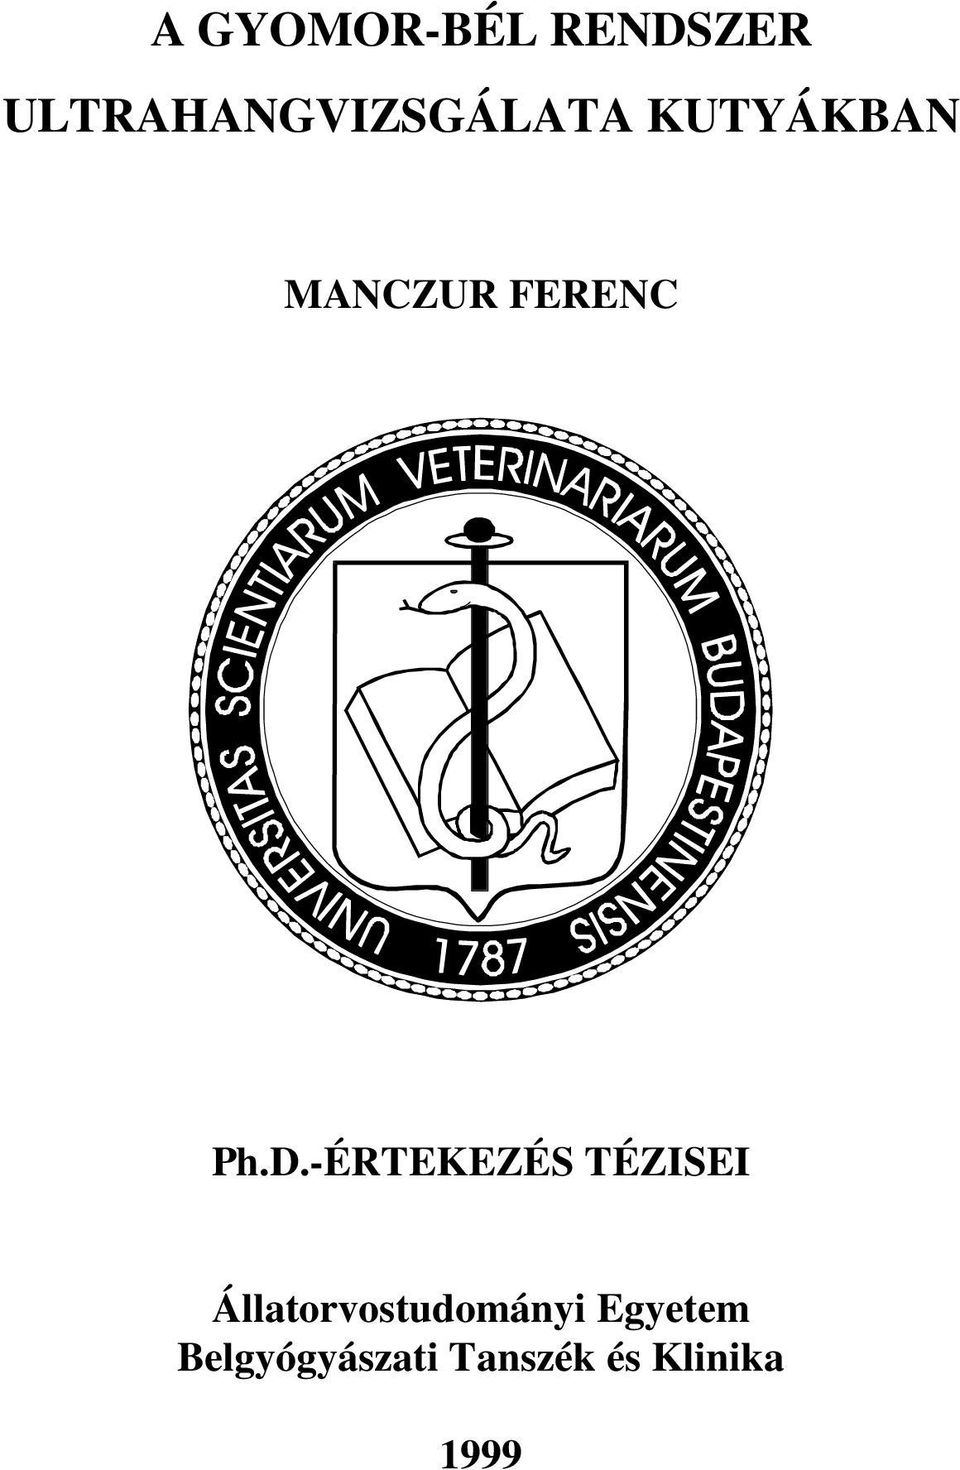 FERENC Ph.D.